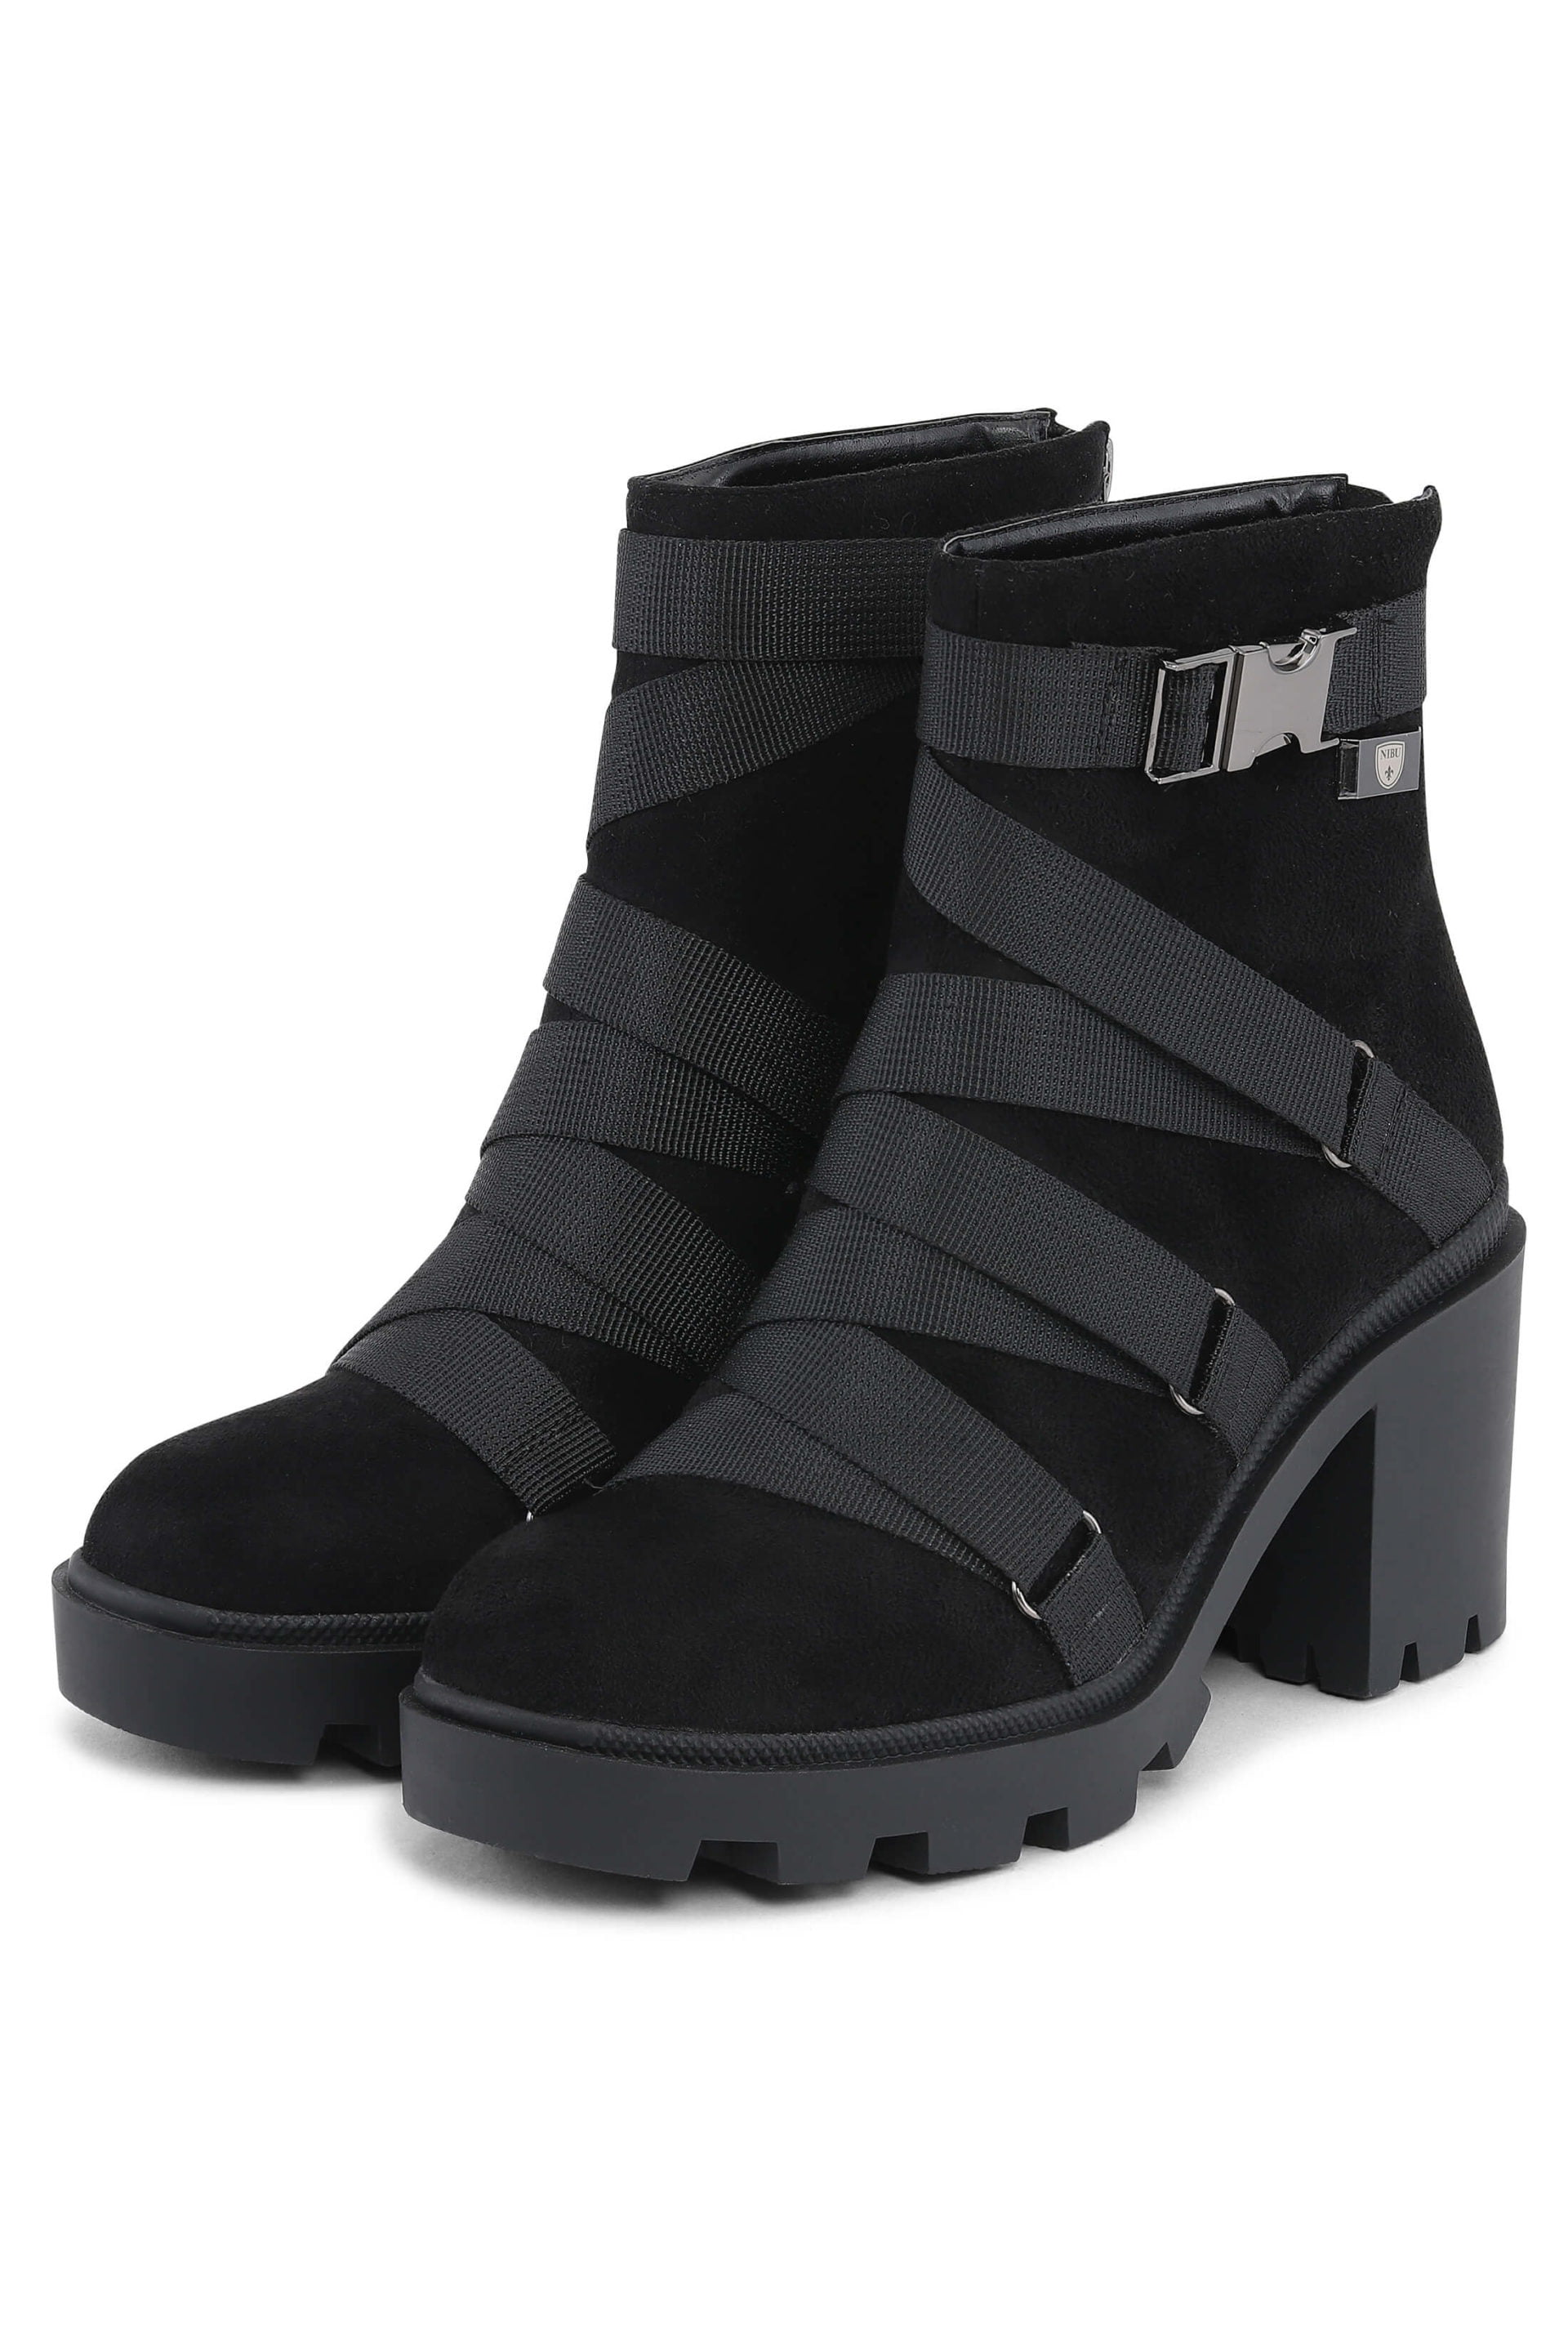 Black winterboots with high heels